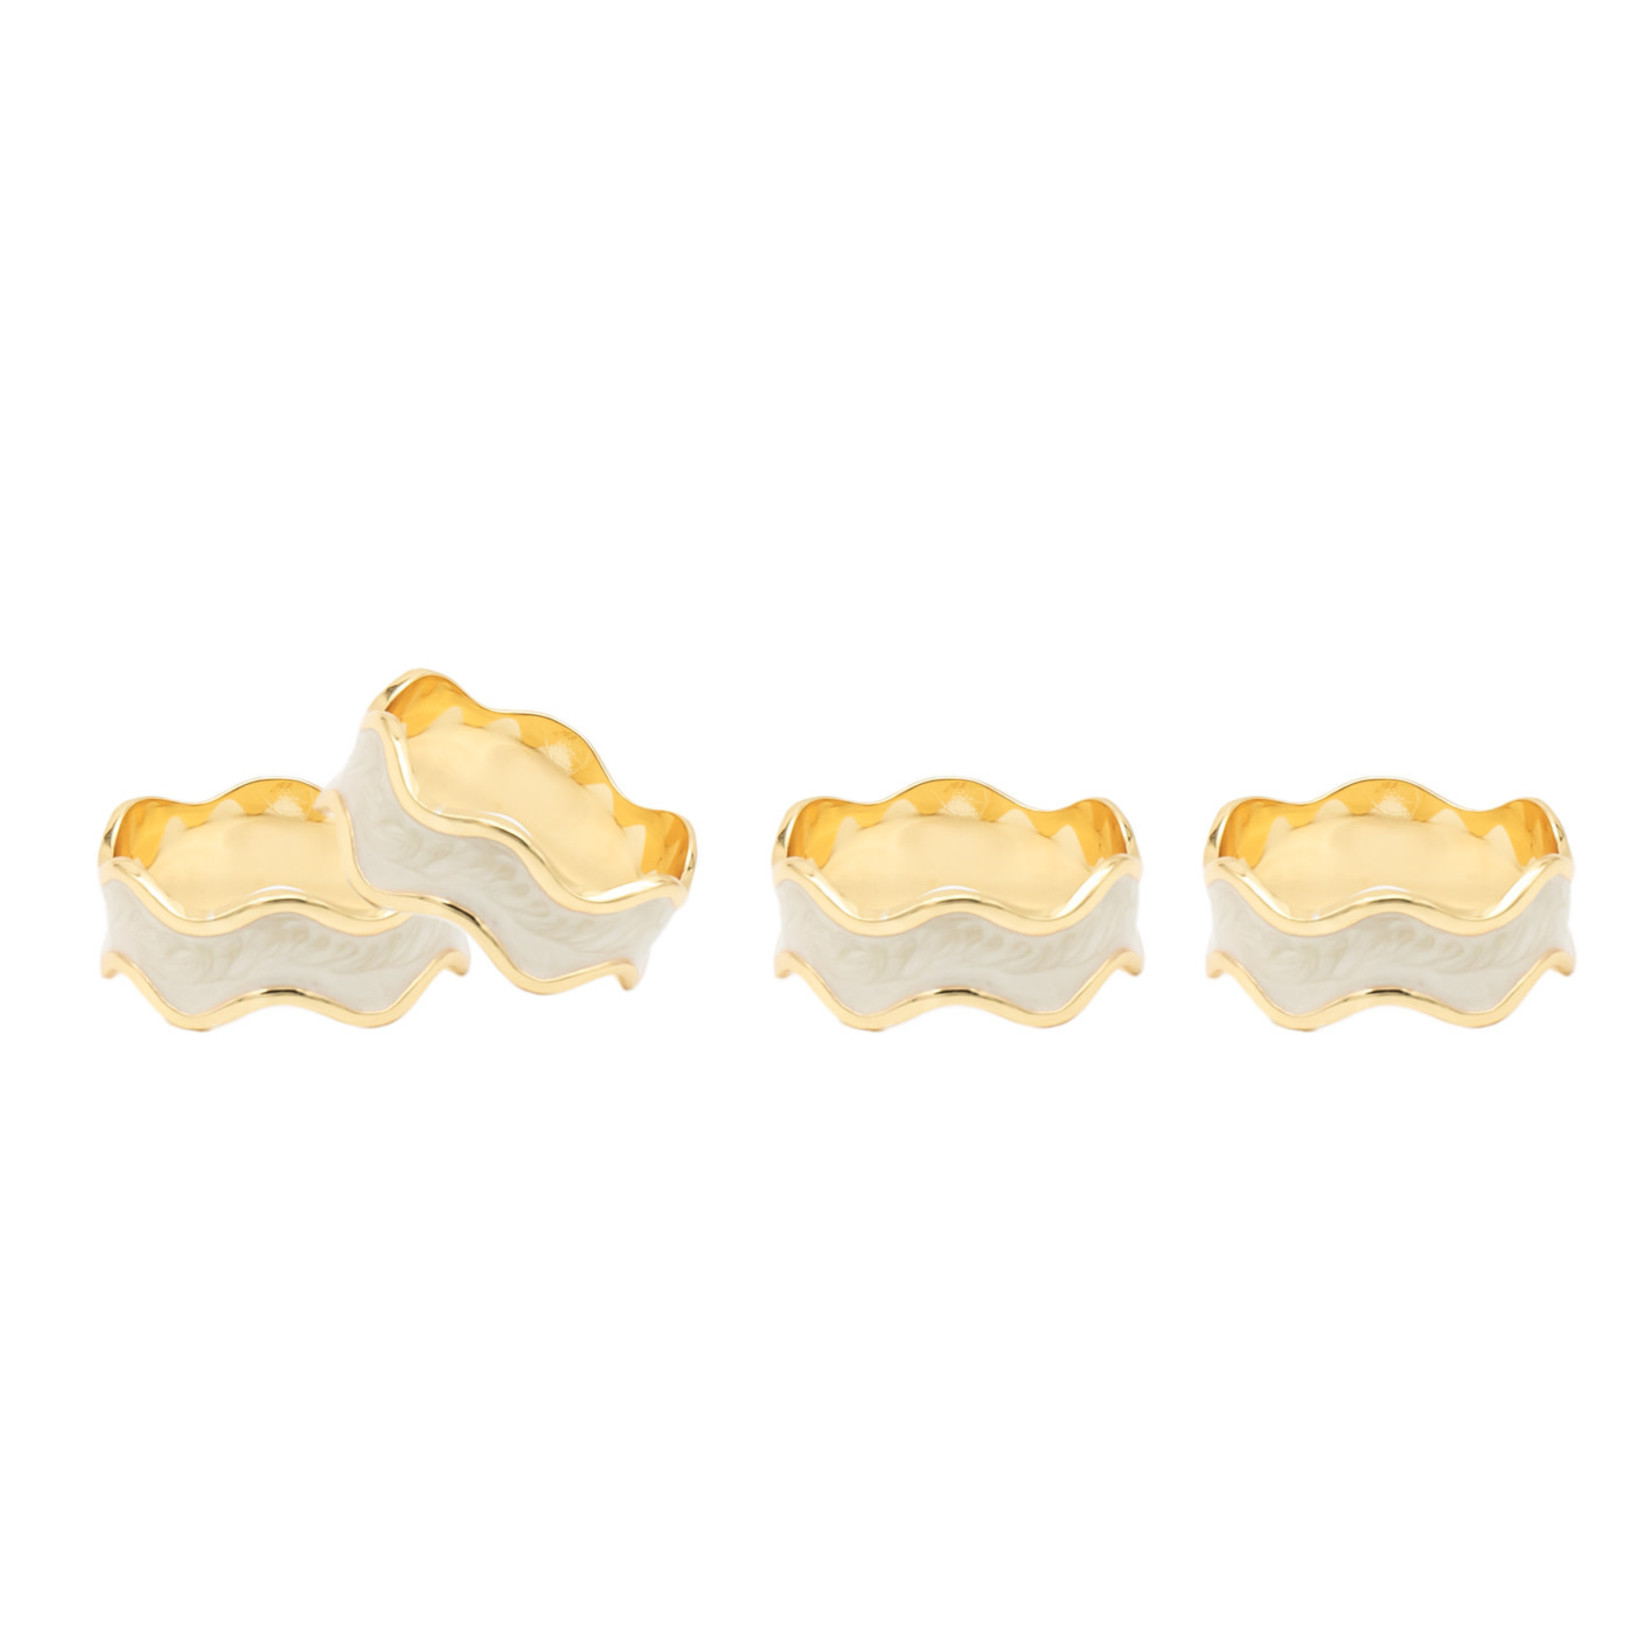 95551  S/4 White Swirl Napkin Rings